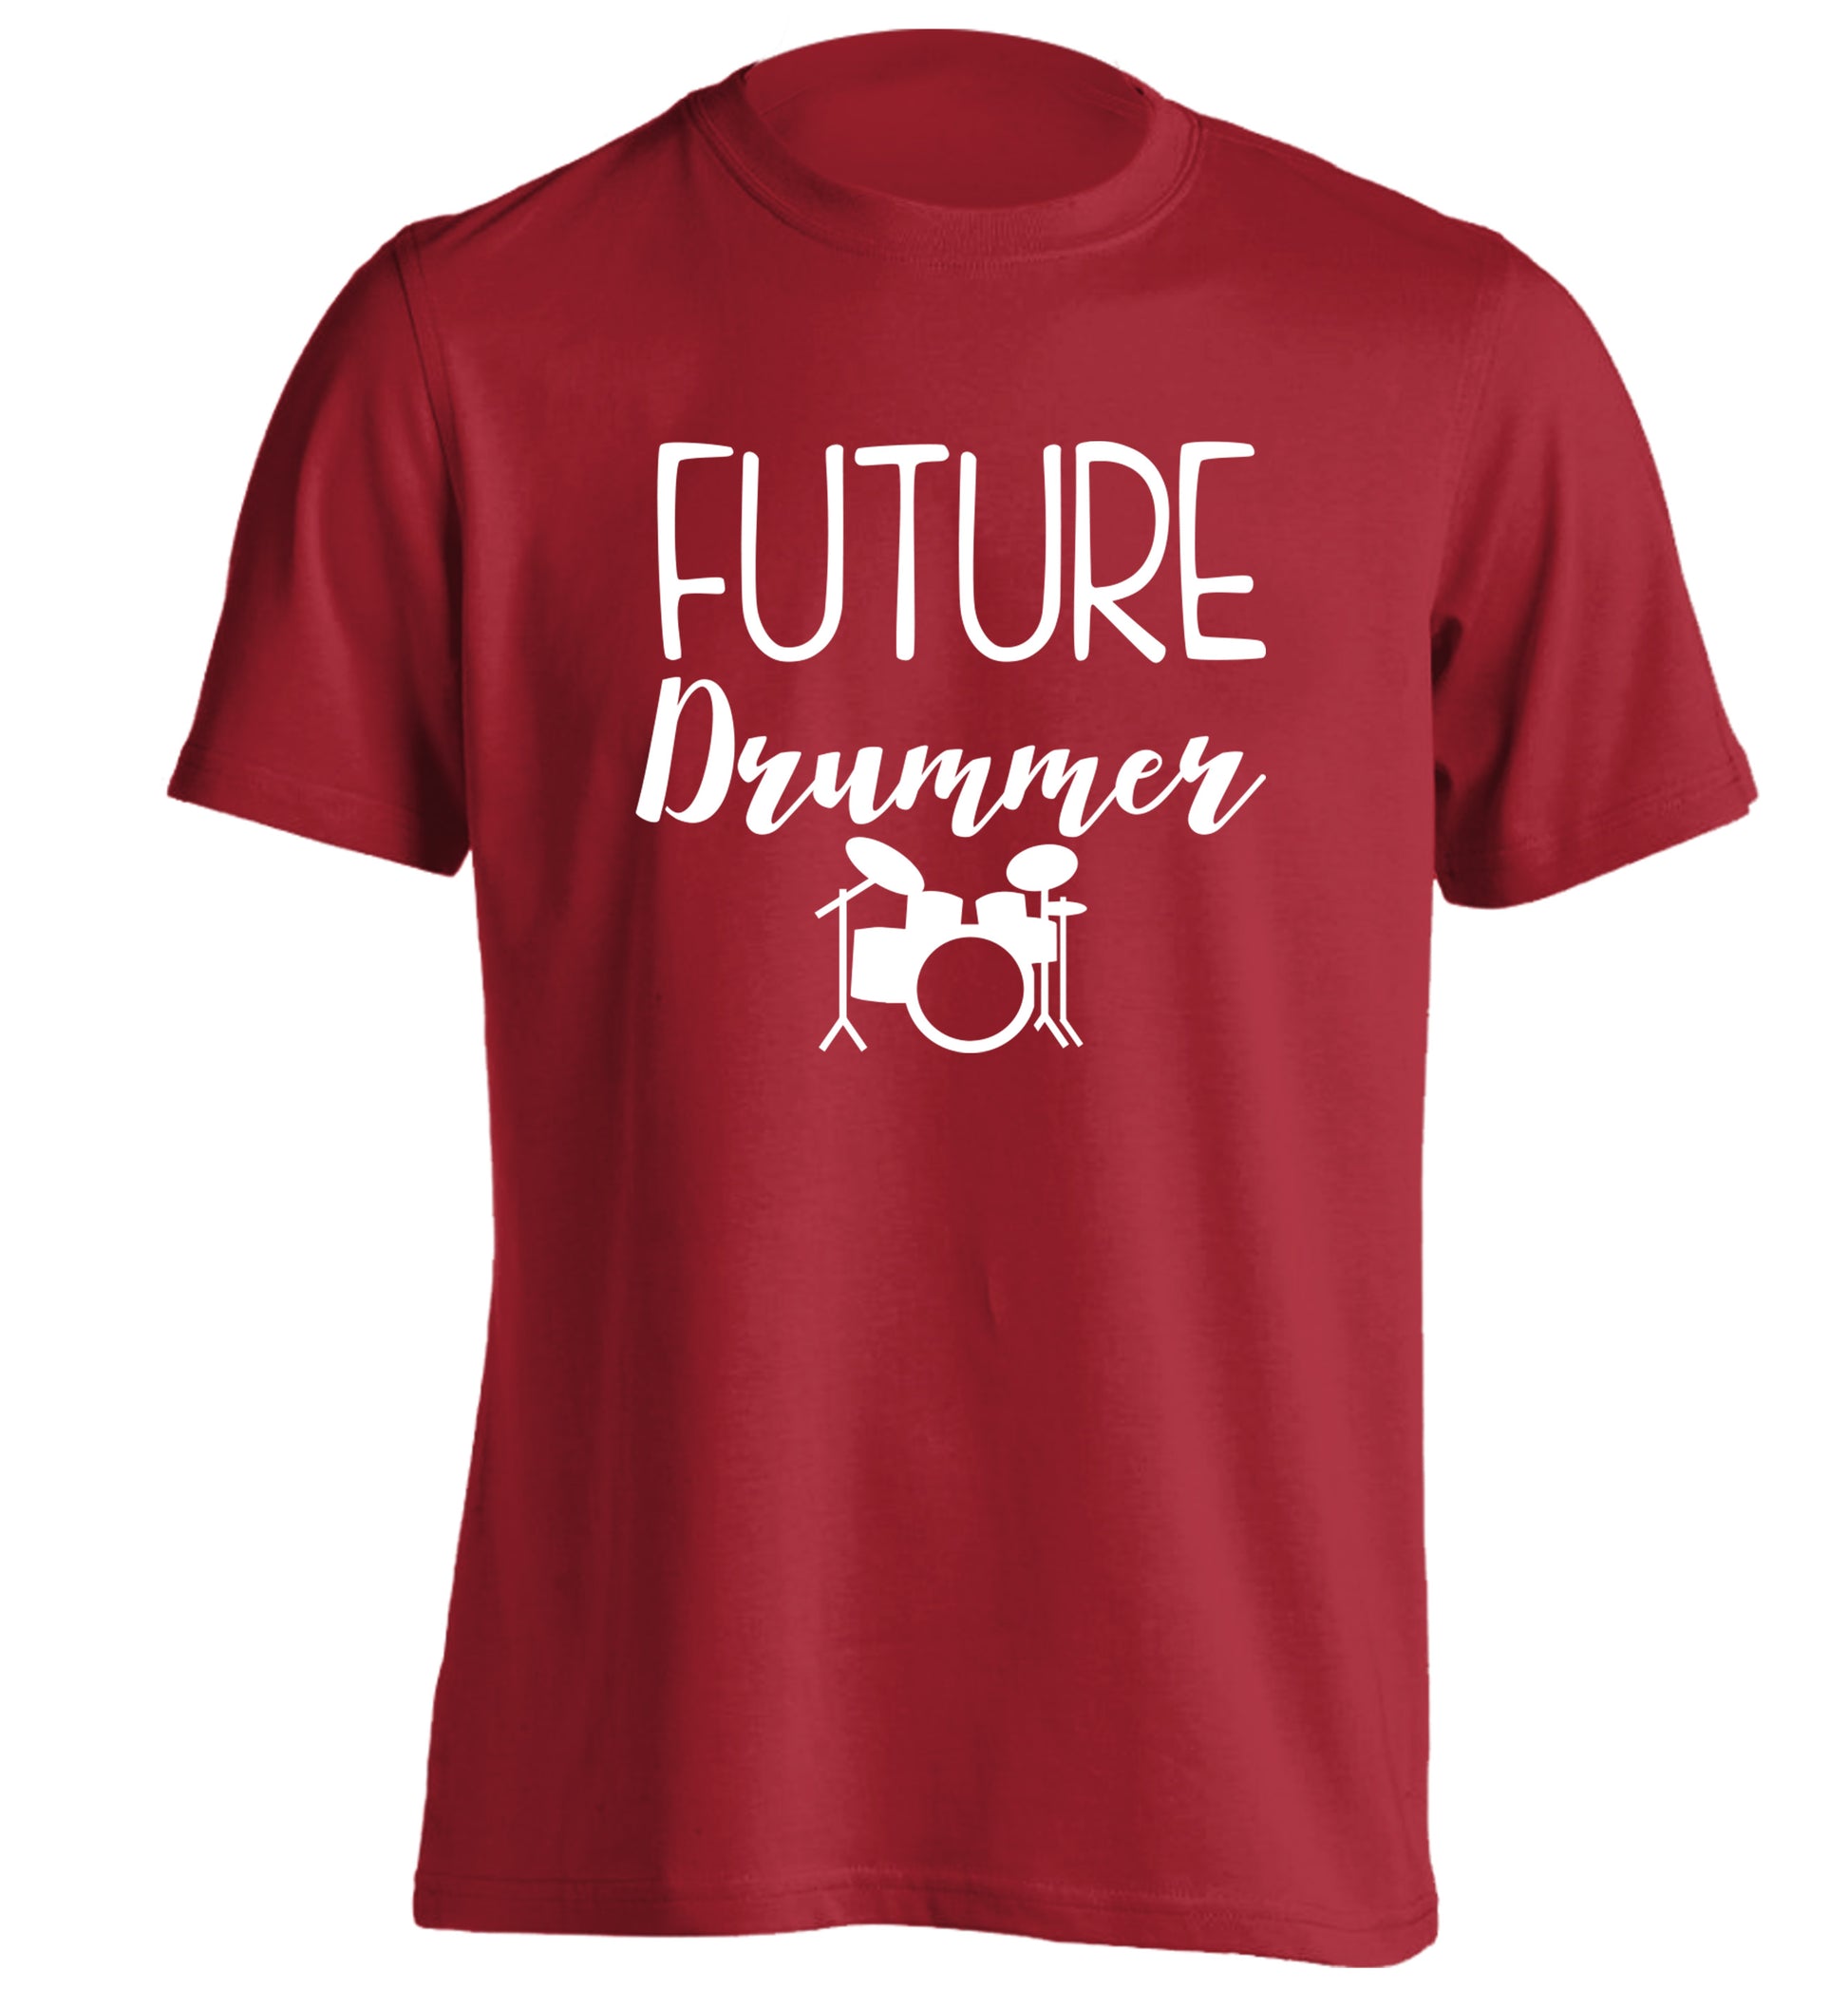 Future drummer adults unisex red Tshirt 2XL